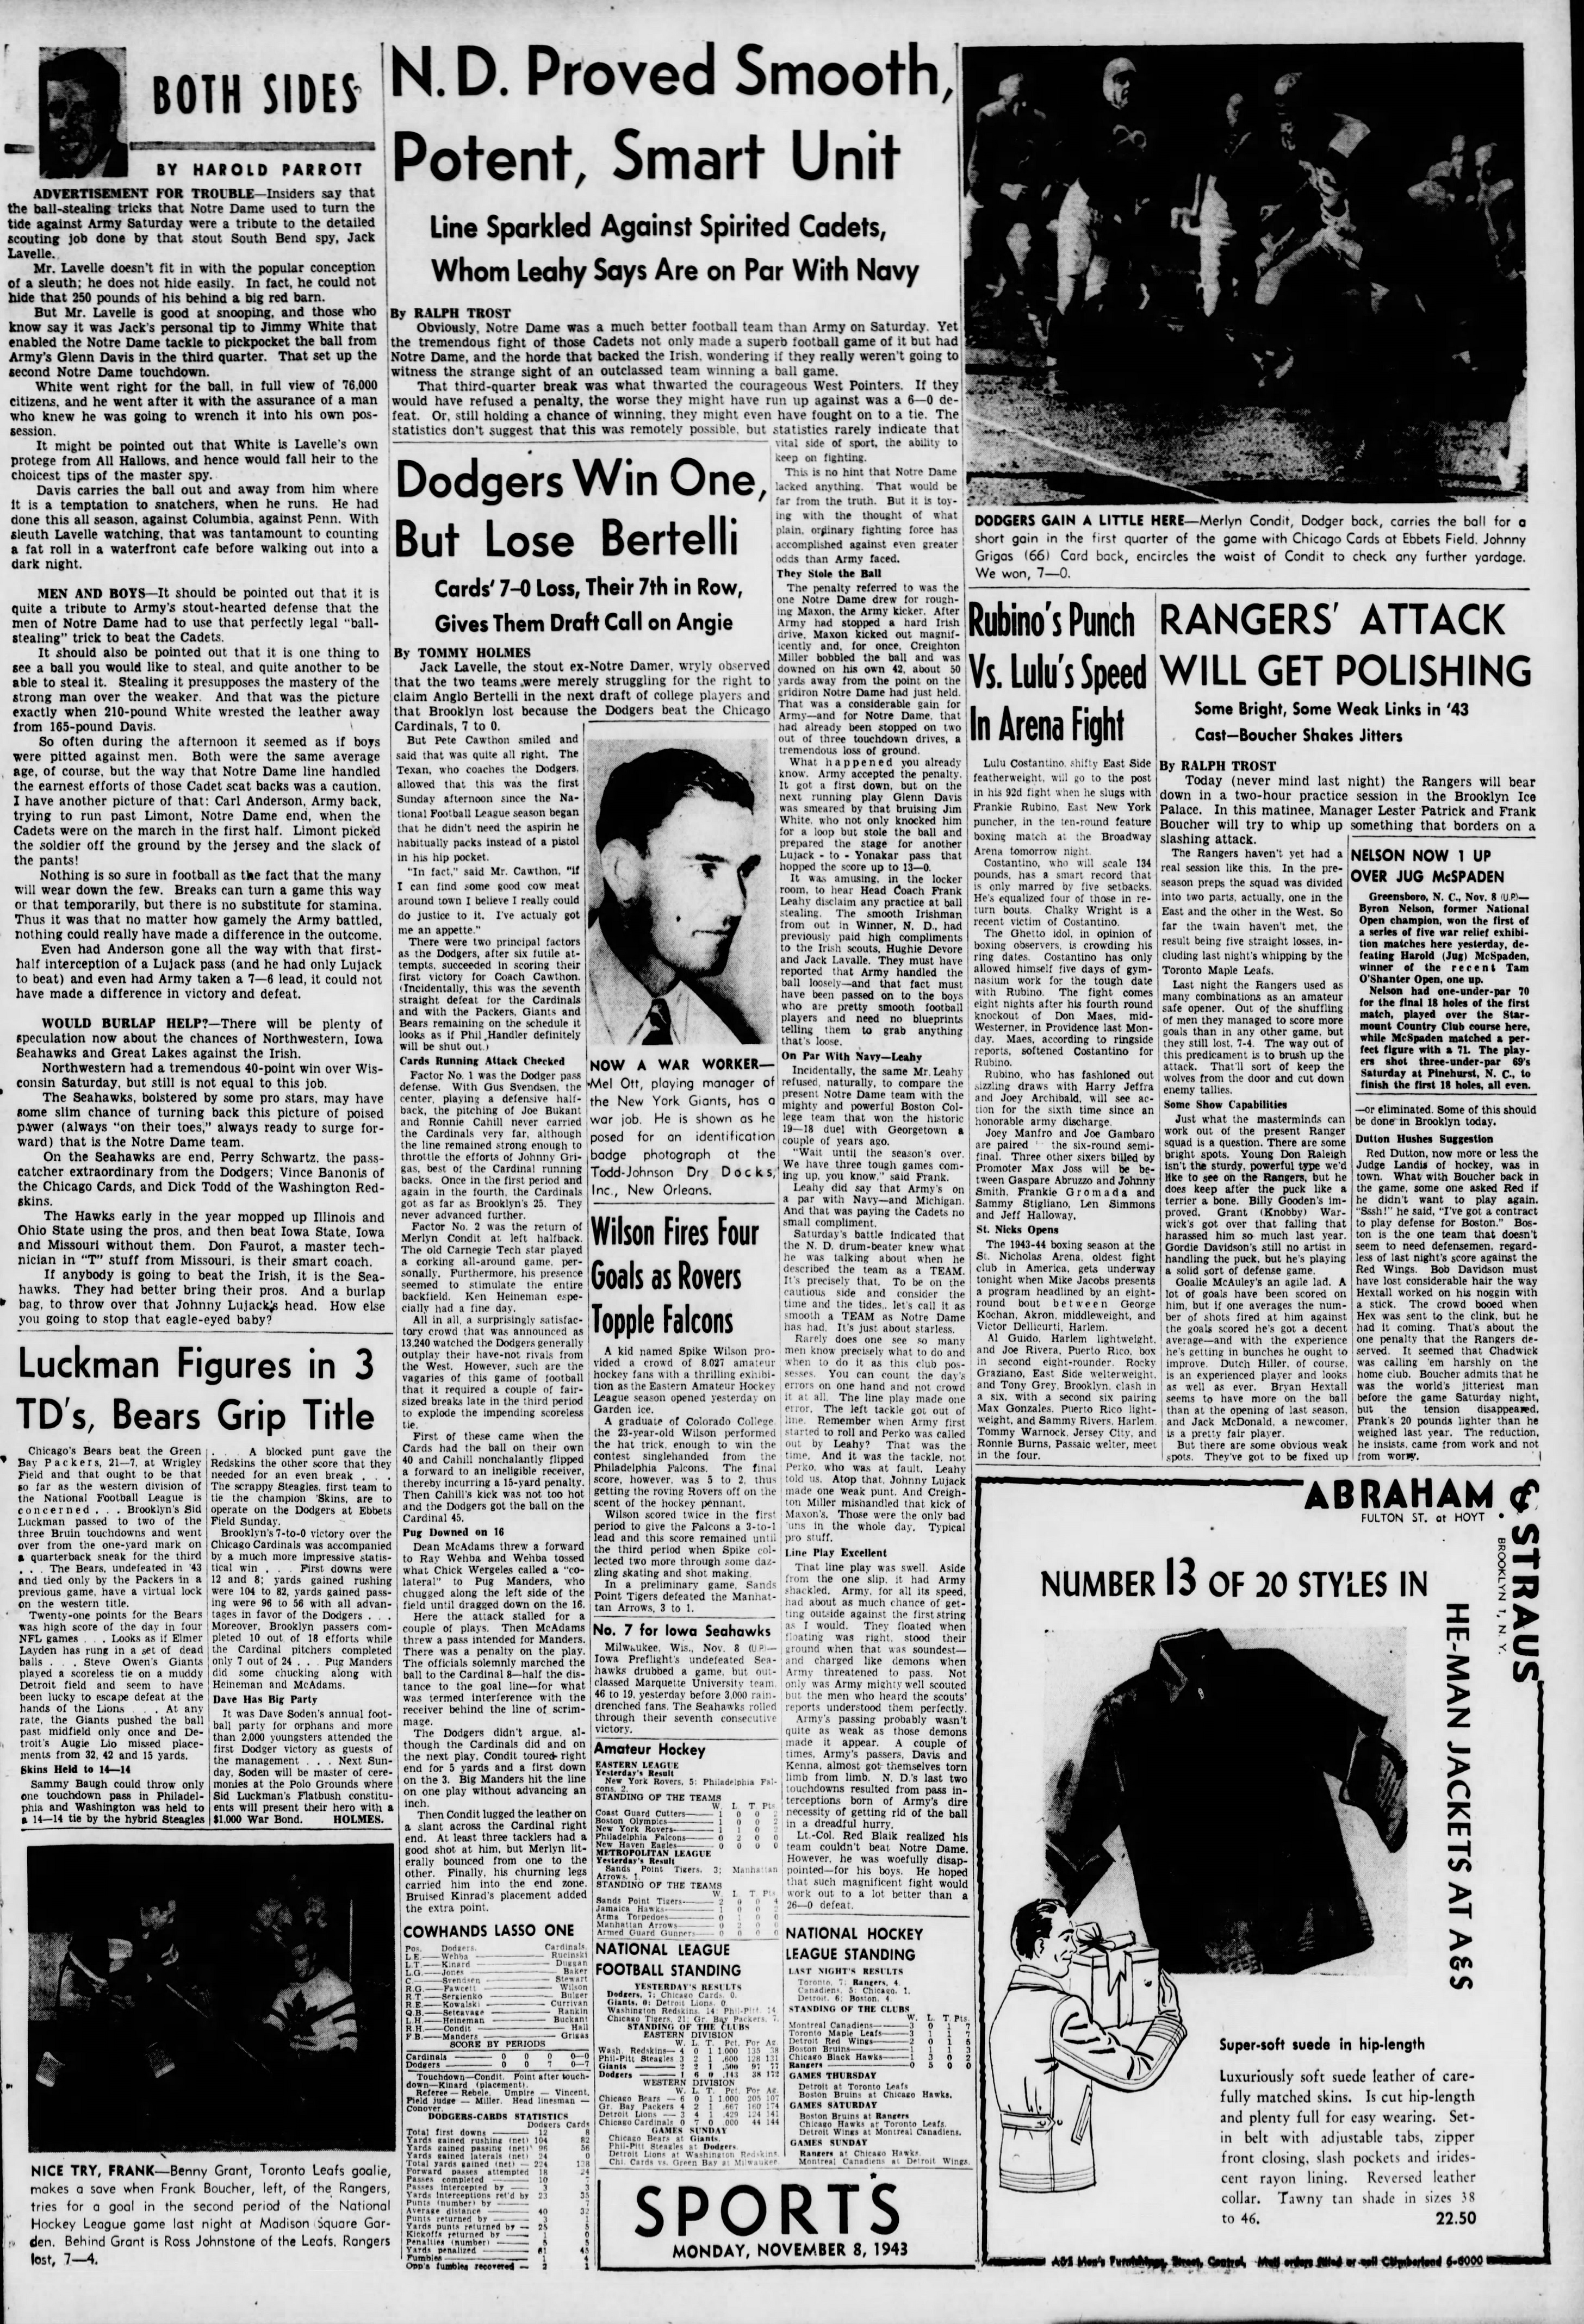 The_Brooklyn_Daily_Eagle_Mon__Nov_8__1943_(6).jpg